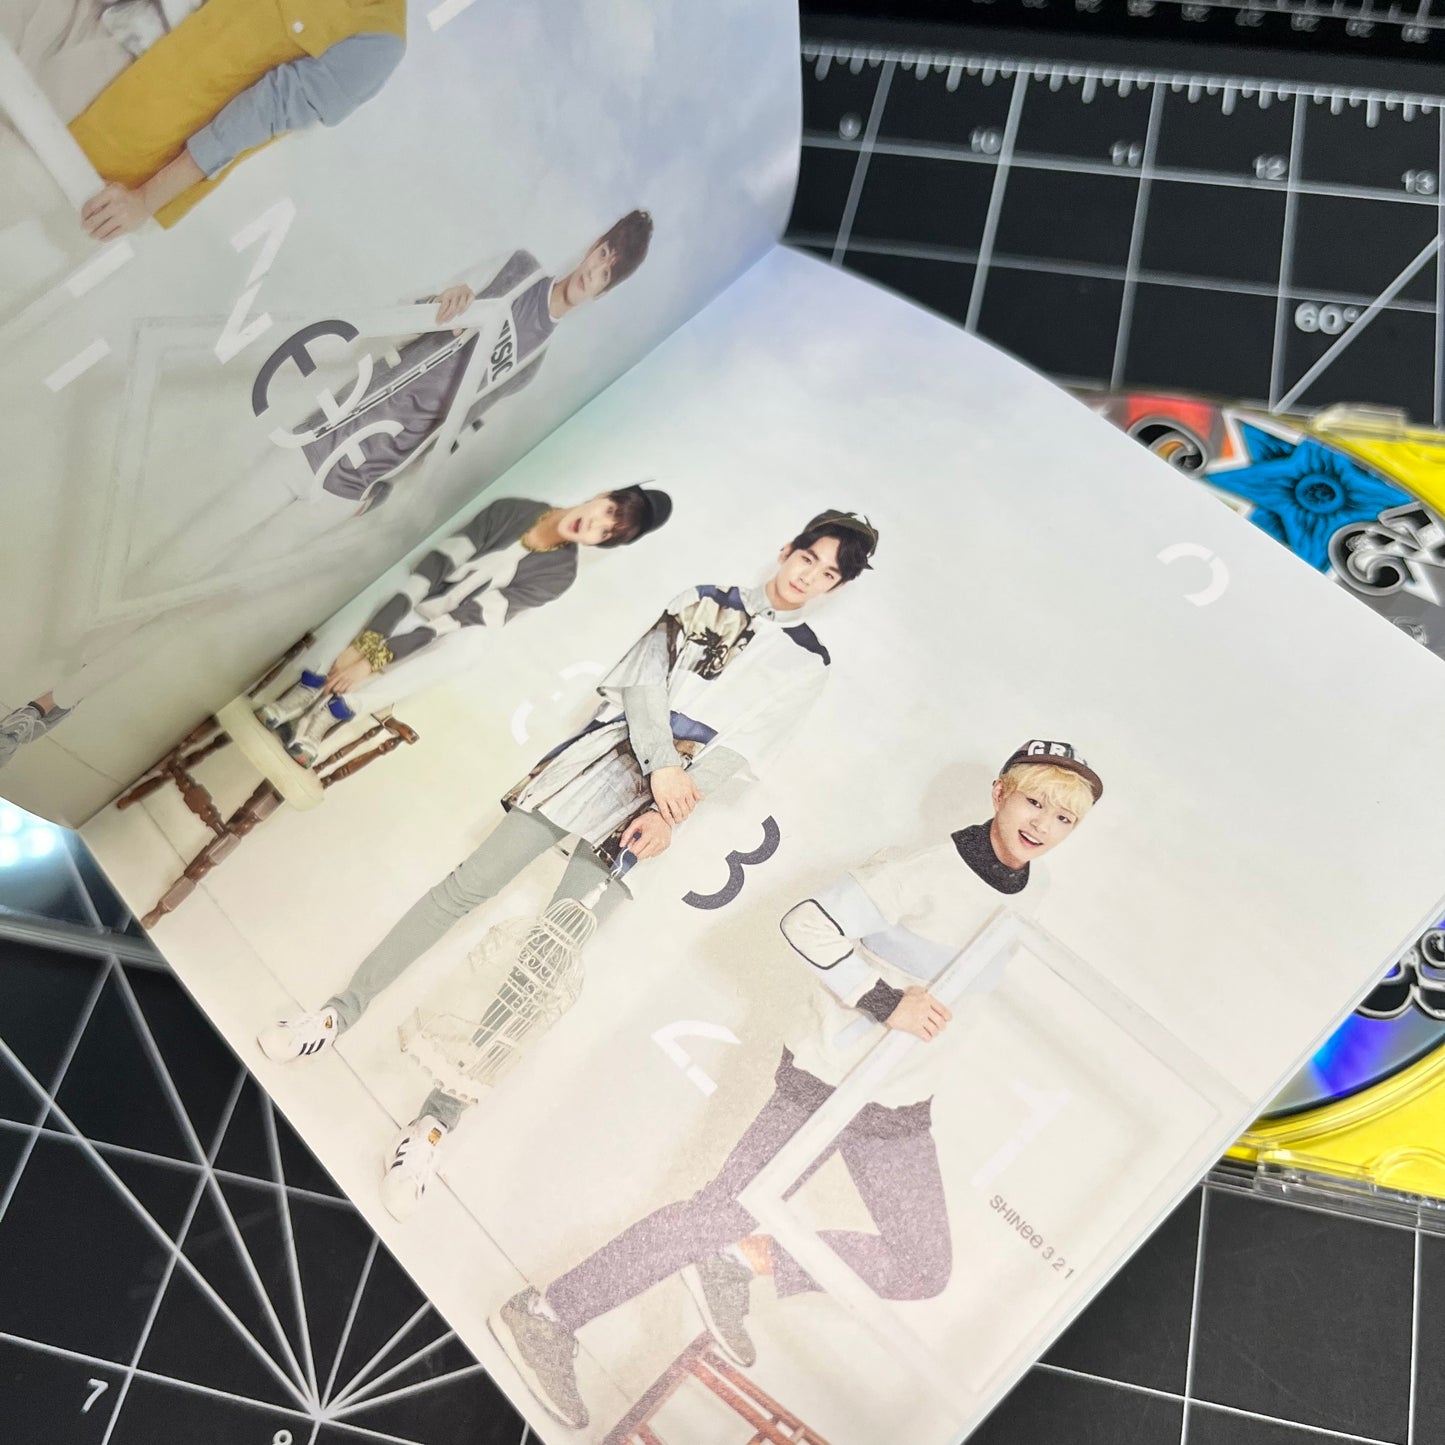 SHINee Japan CD 3 2 1 (Regular Edition) - No Photocard